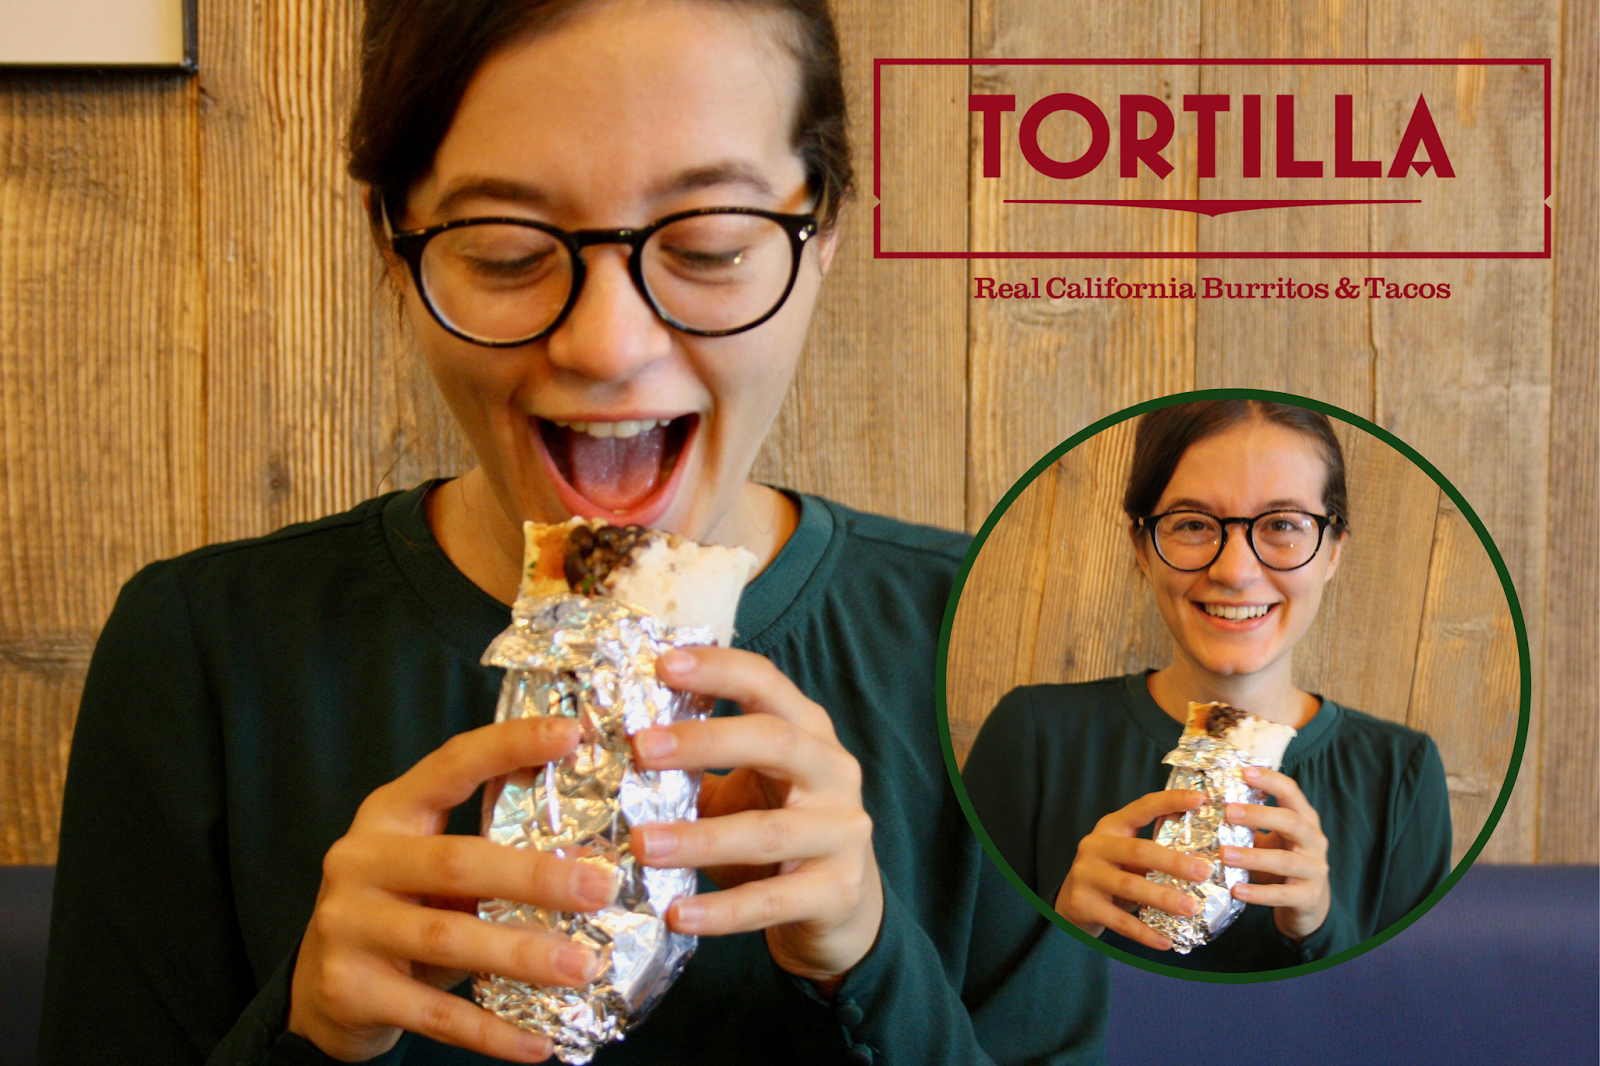 Tortilla Cambridge restaurant review burrito taco